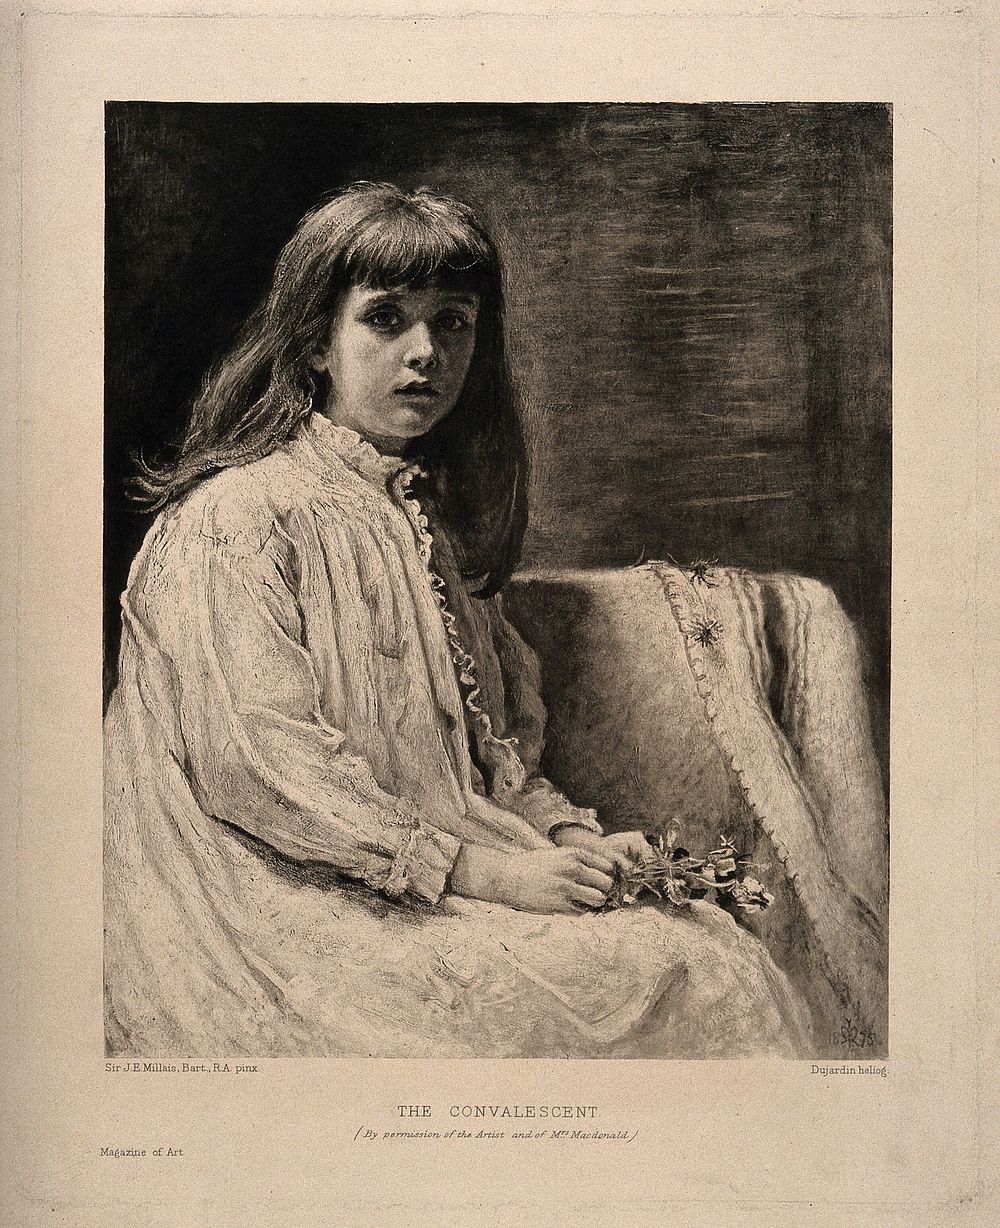 A convalescing girl. Heliogravure by P. Dujardin after J.E. Millais, 1875.